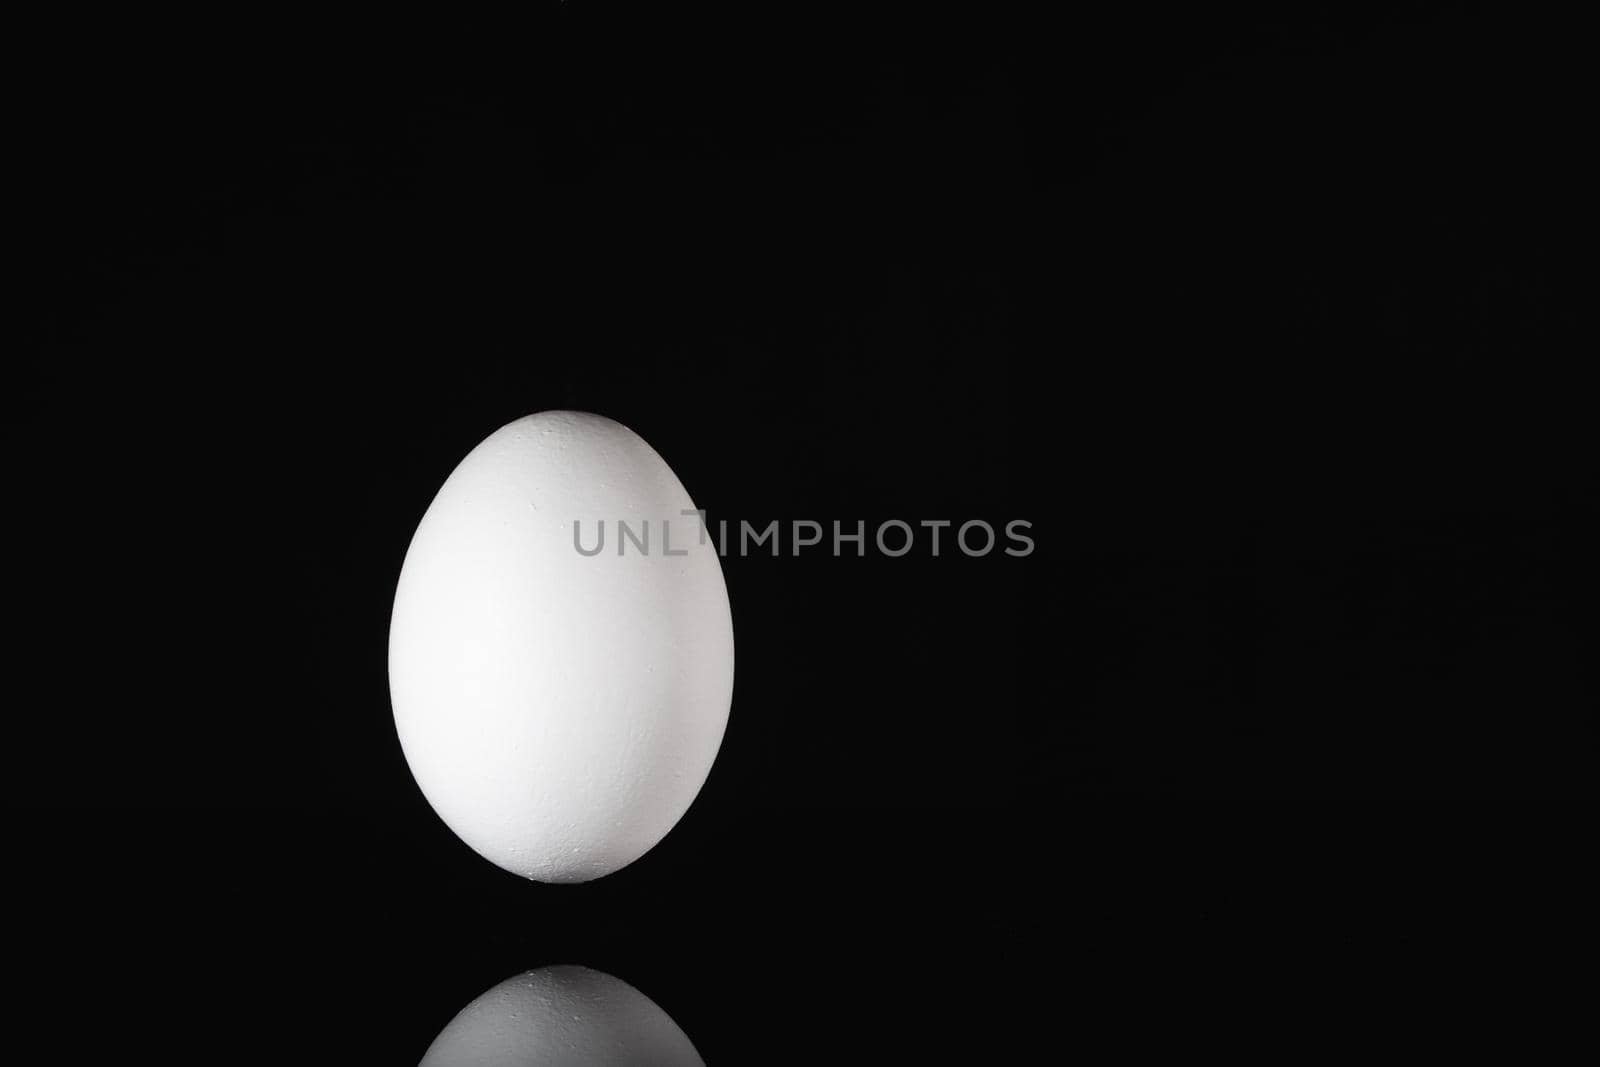 White egg levitating over a black glass table in the dark room.